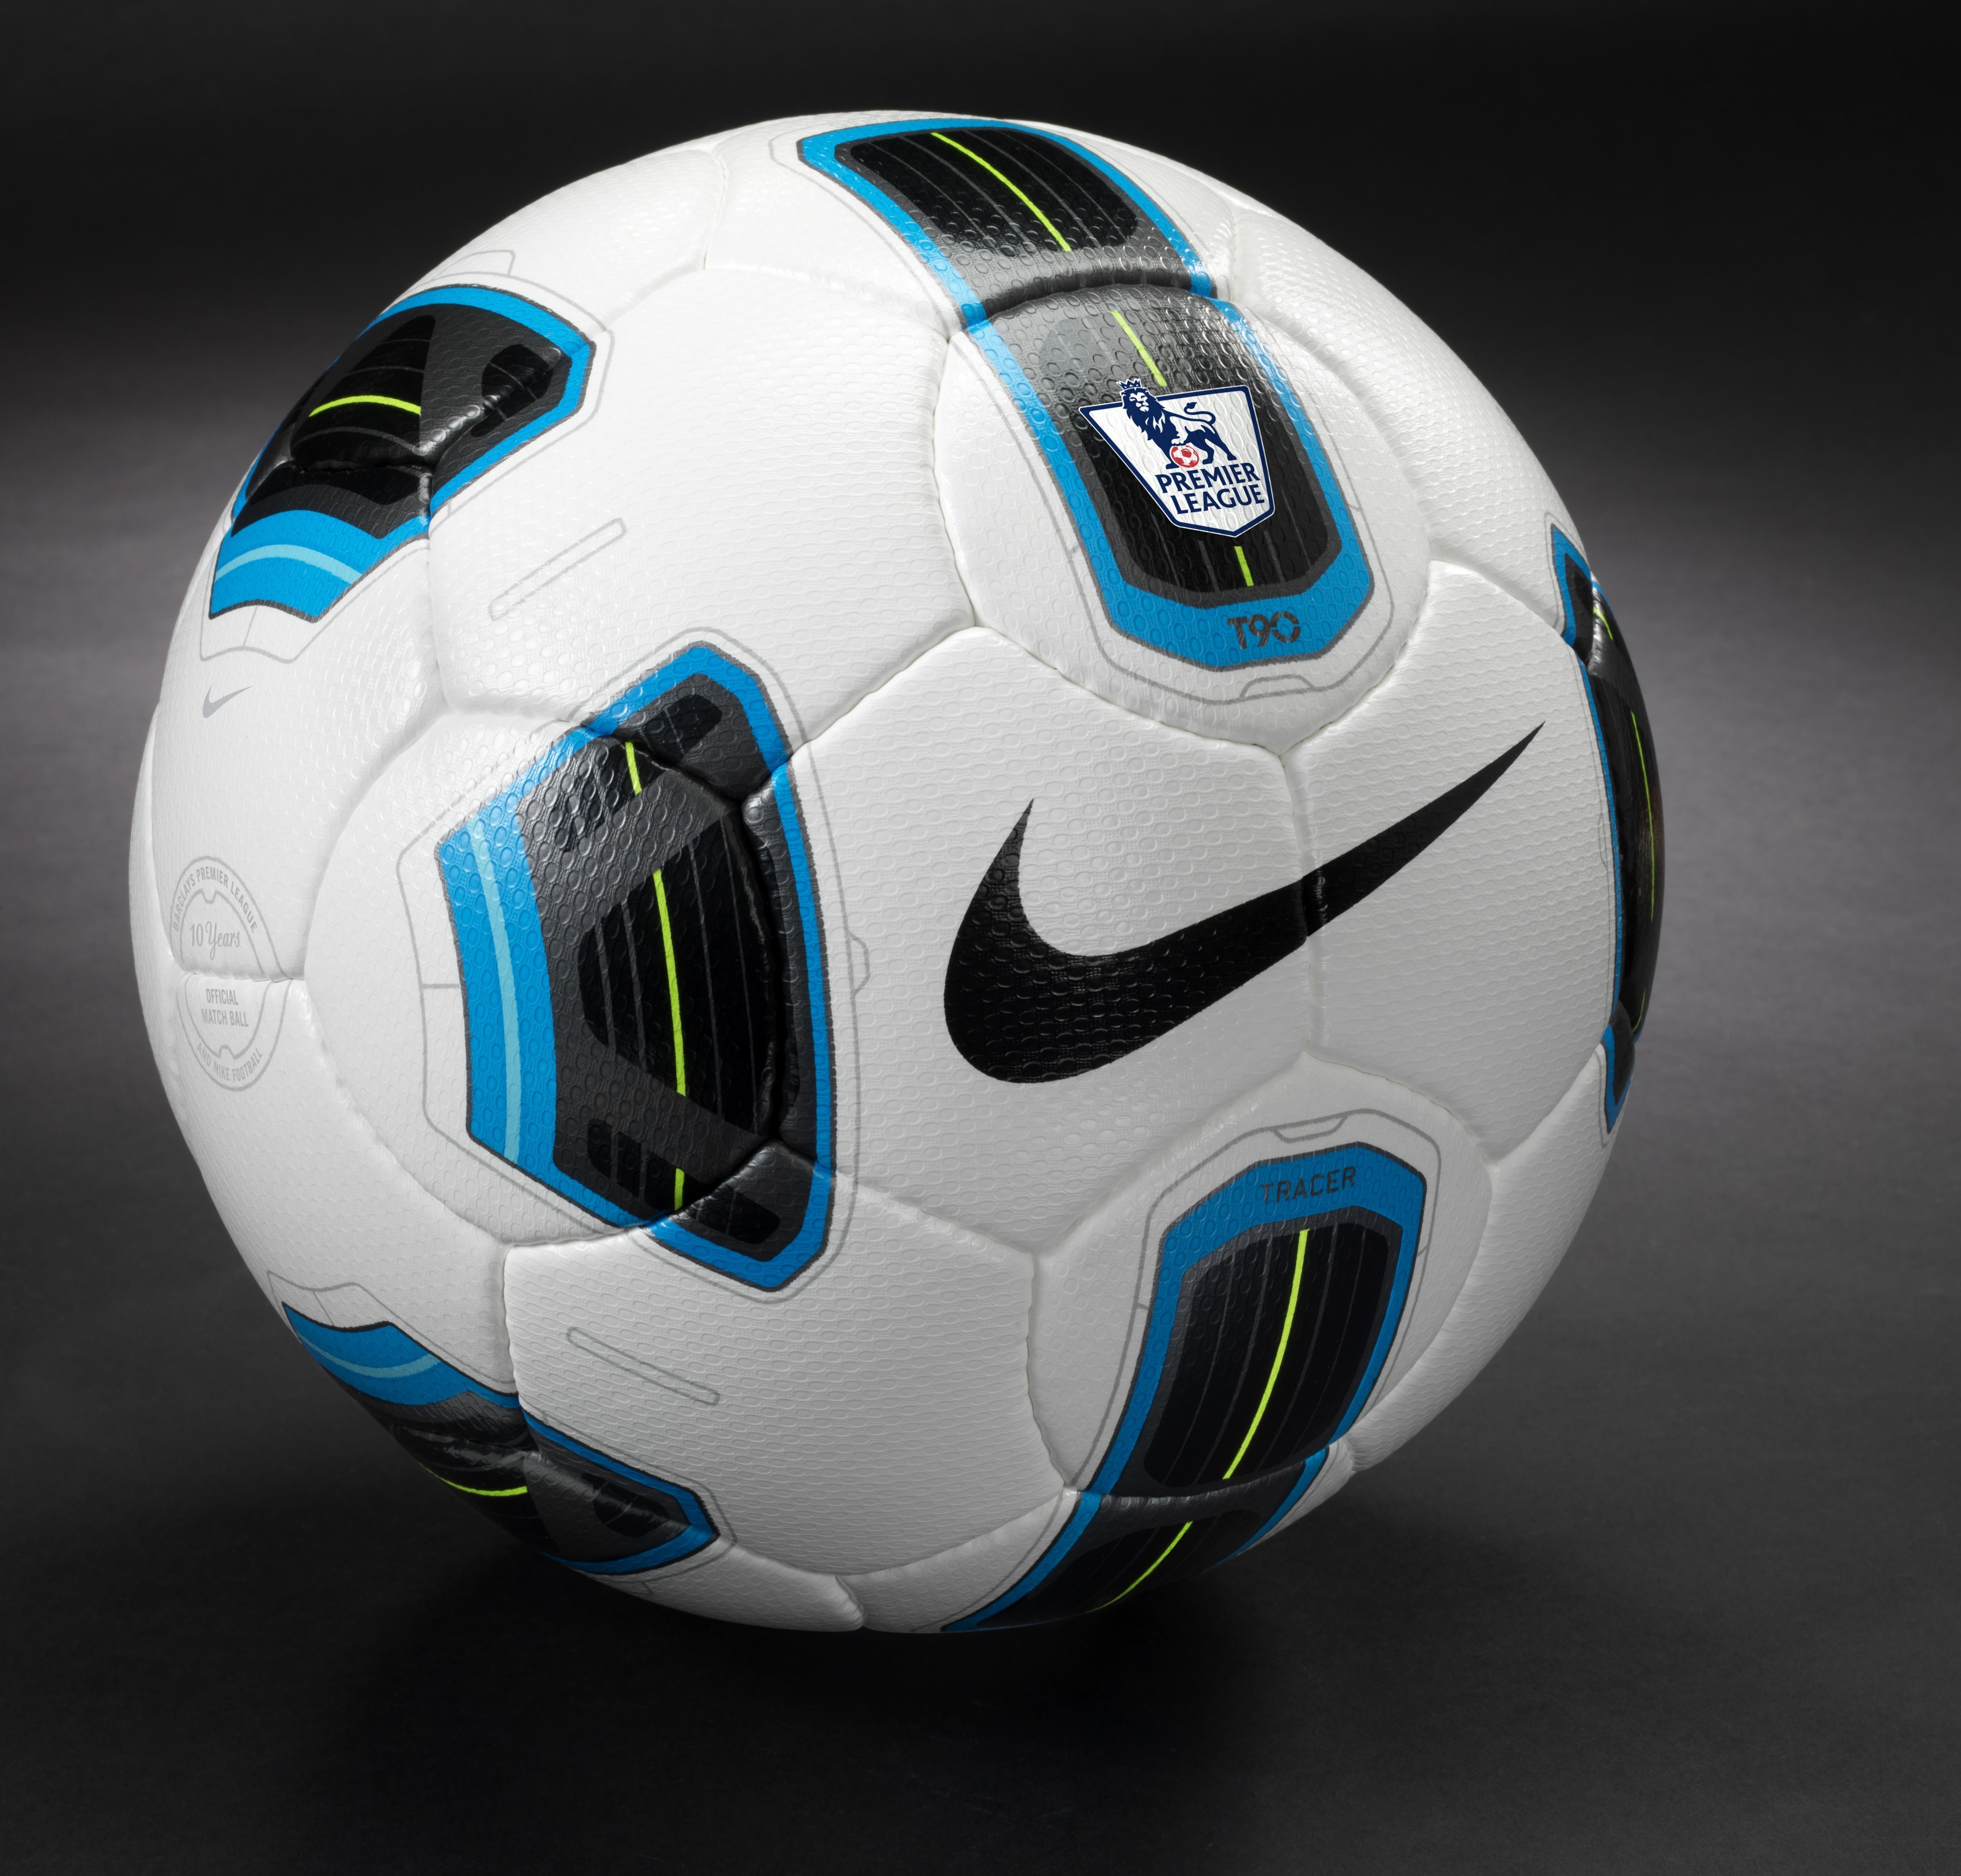 Nike Soccer Ball Wallpapers